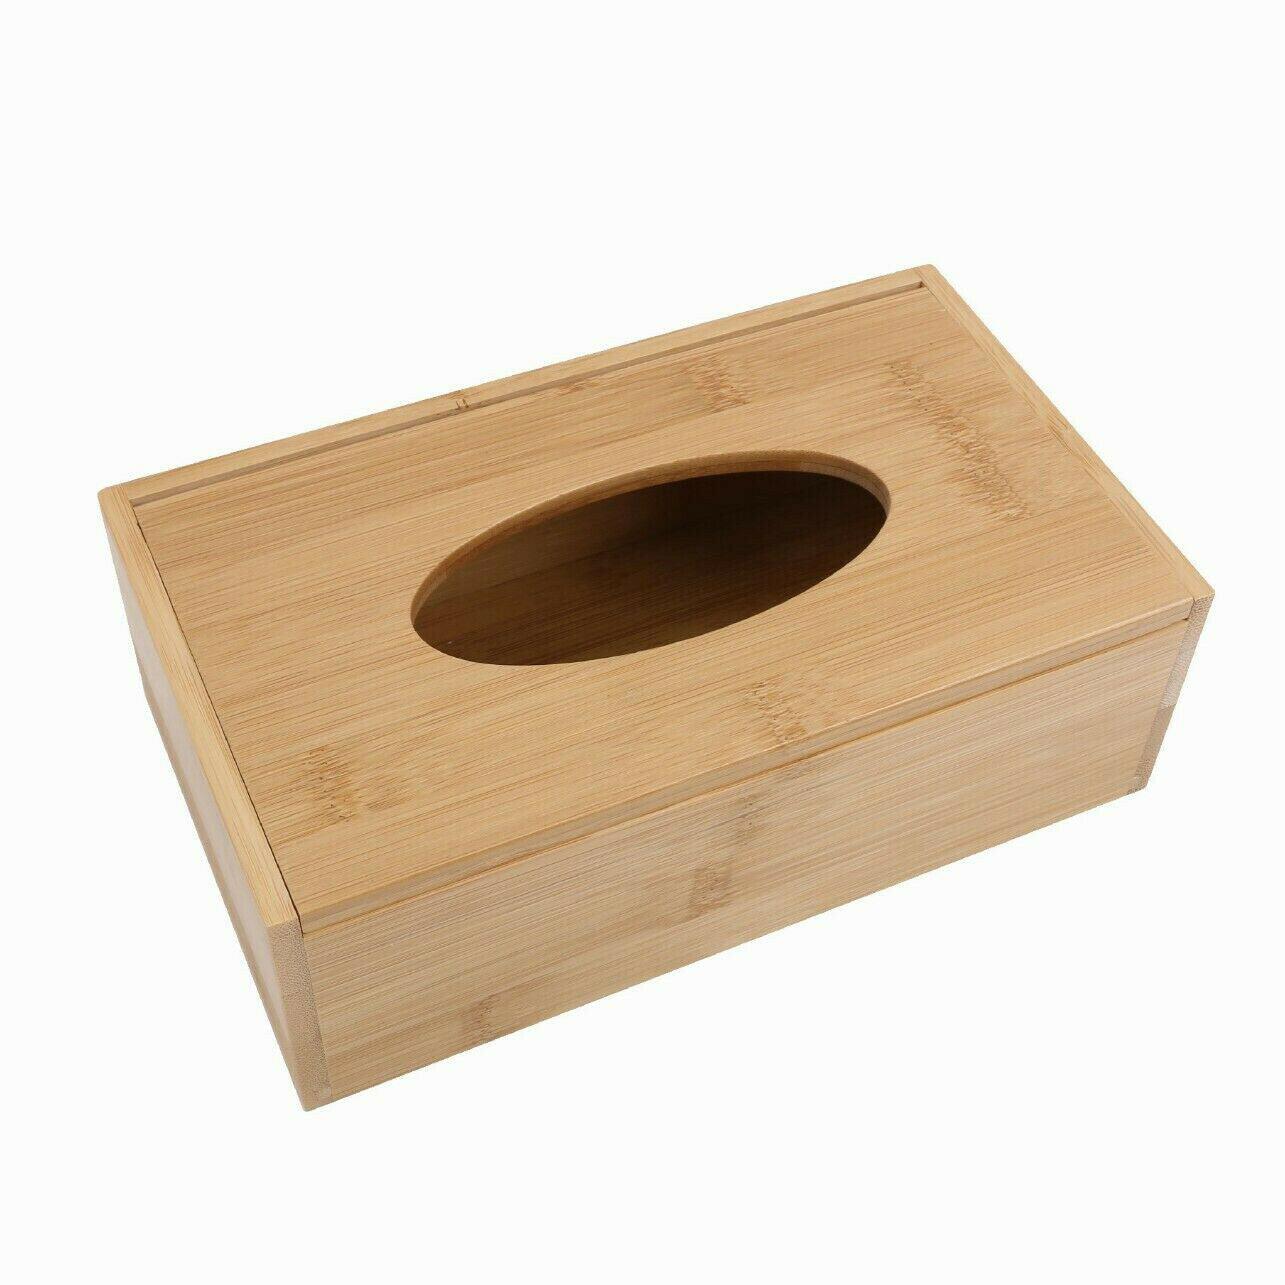 Bamboo Tissue Box Paper Wooden Cover Holder Dispenser Storage Case Home Office